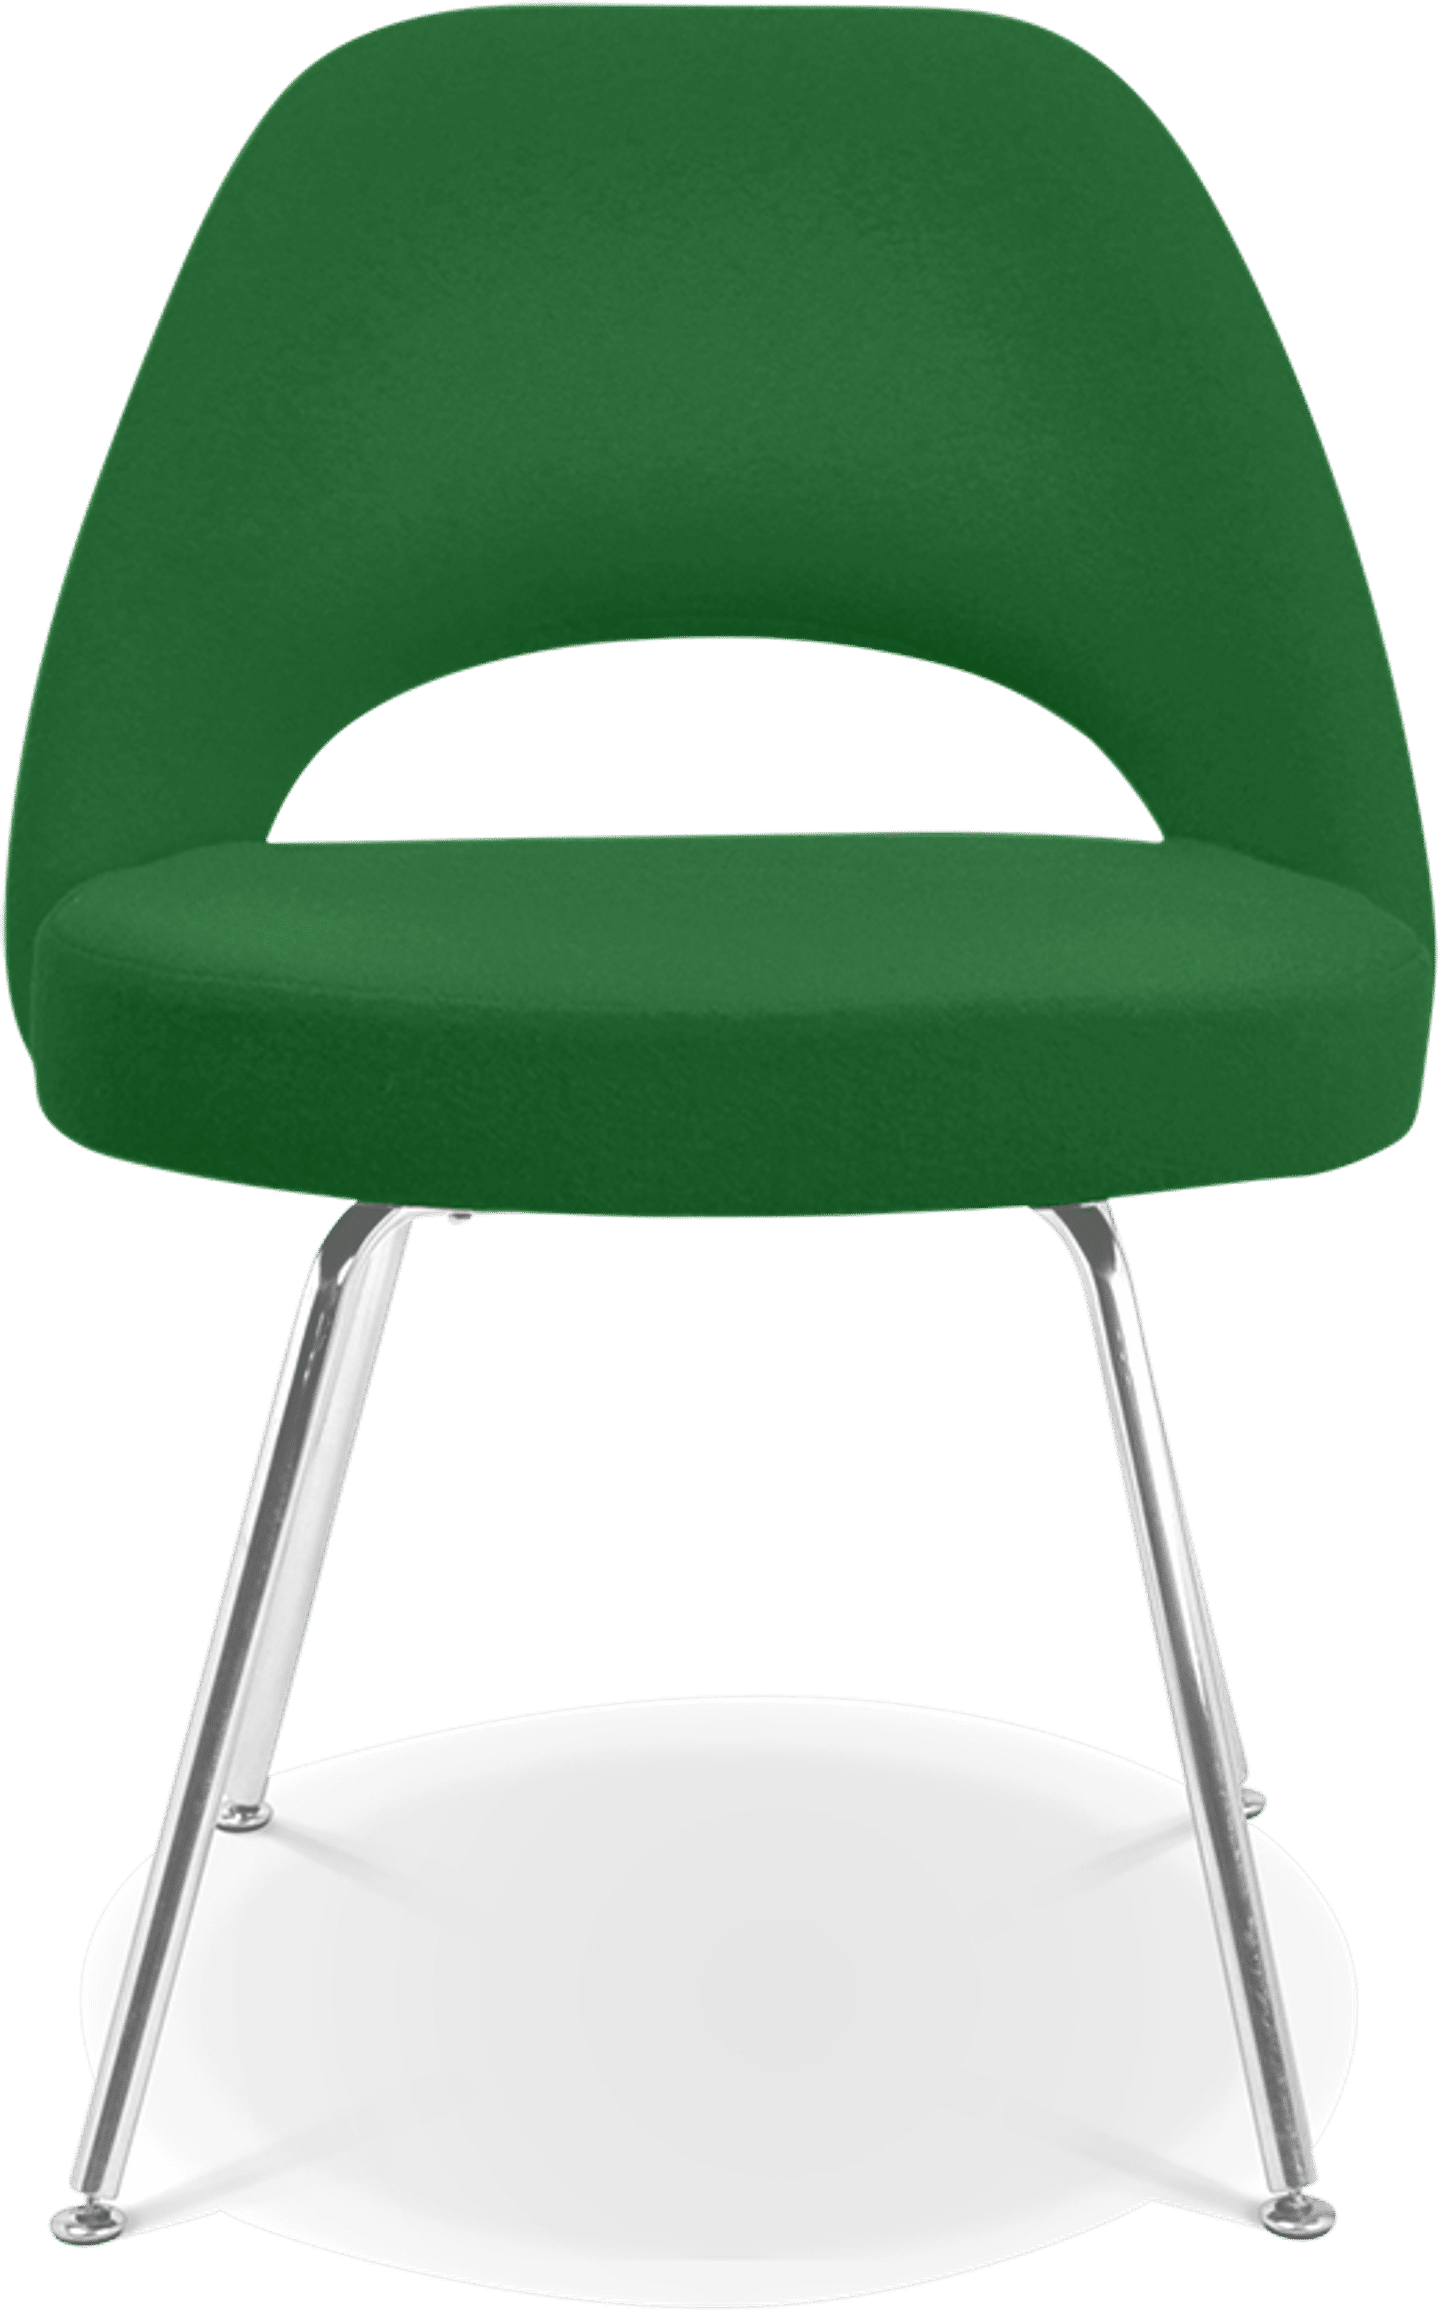 Saarinen Executive Chair Green image.